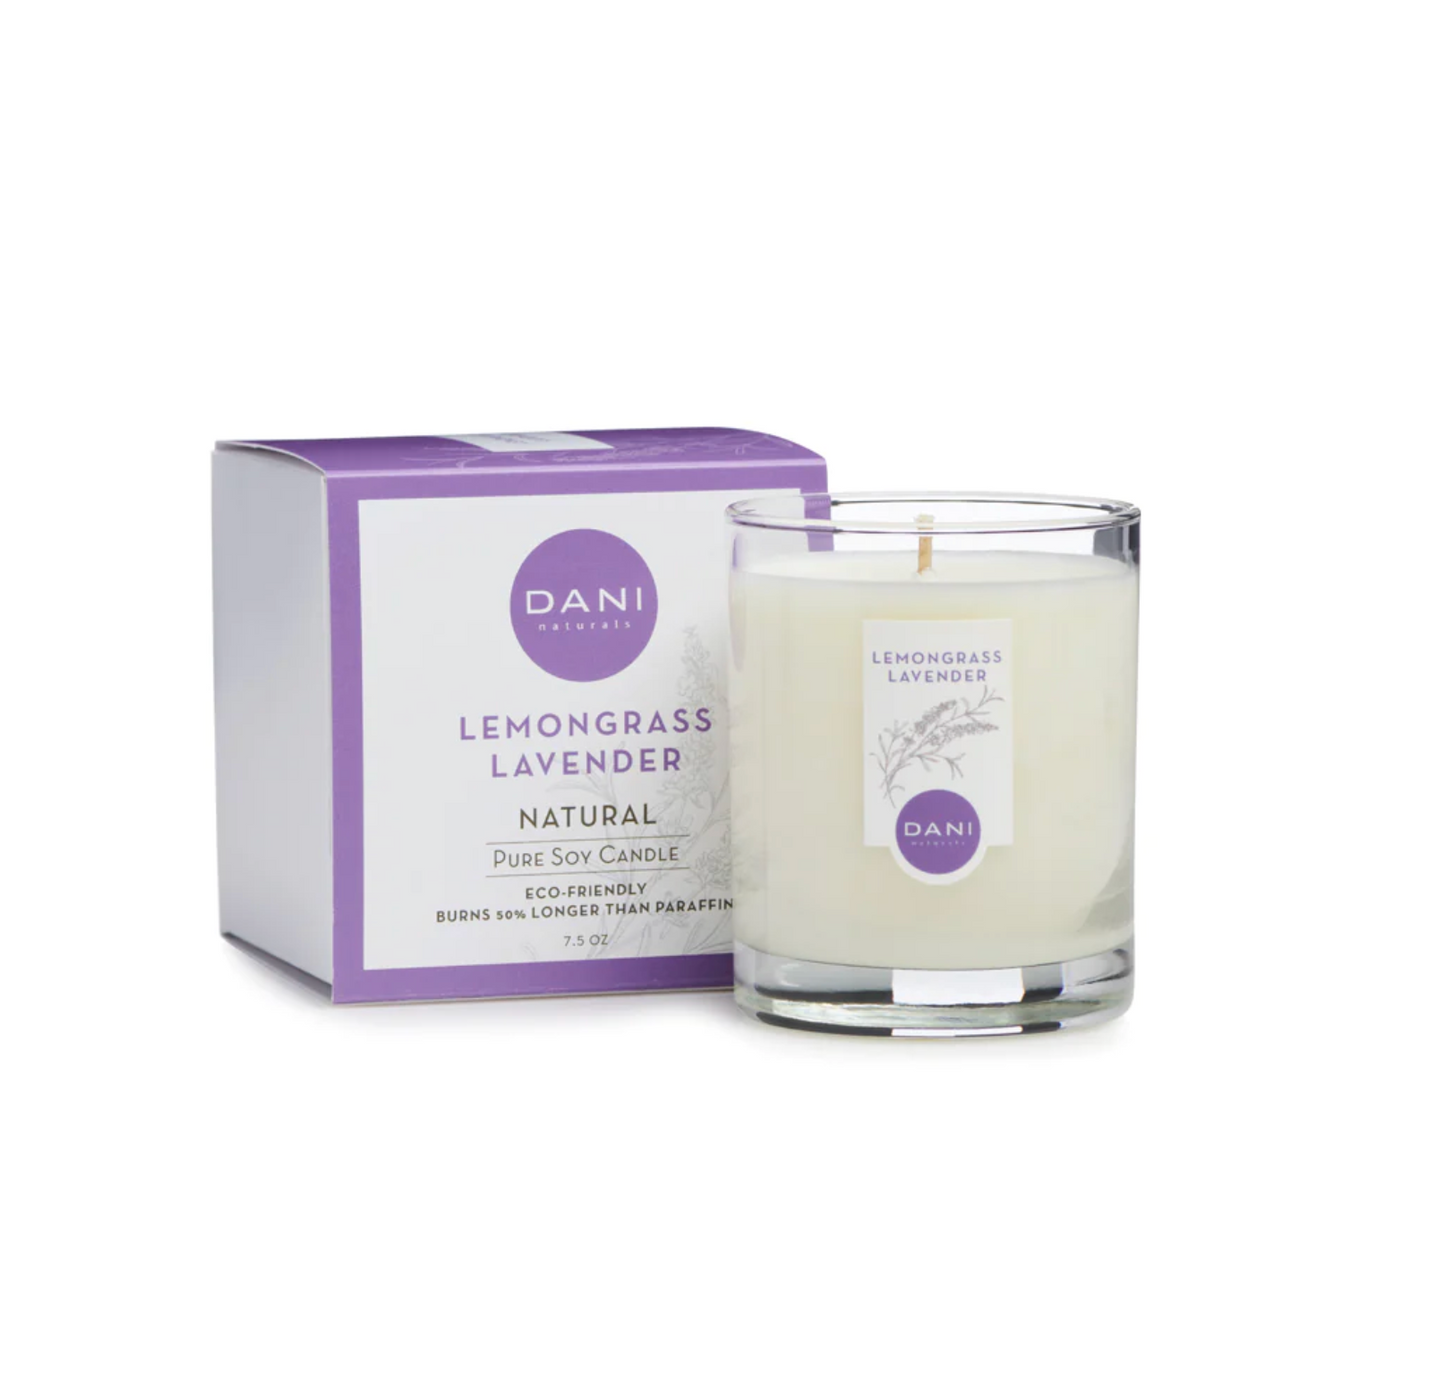 Lemongrass Lavender Small Glass Candle, 7.5oz